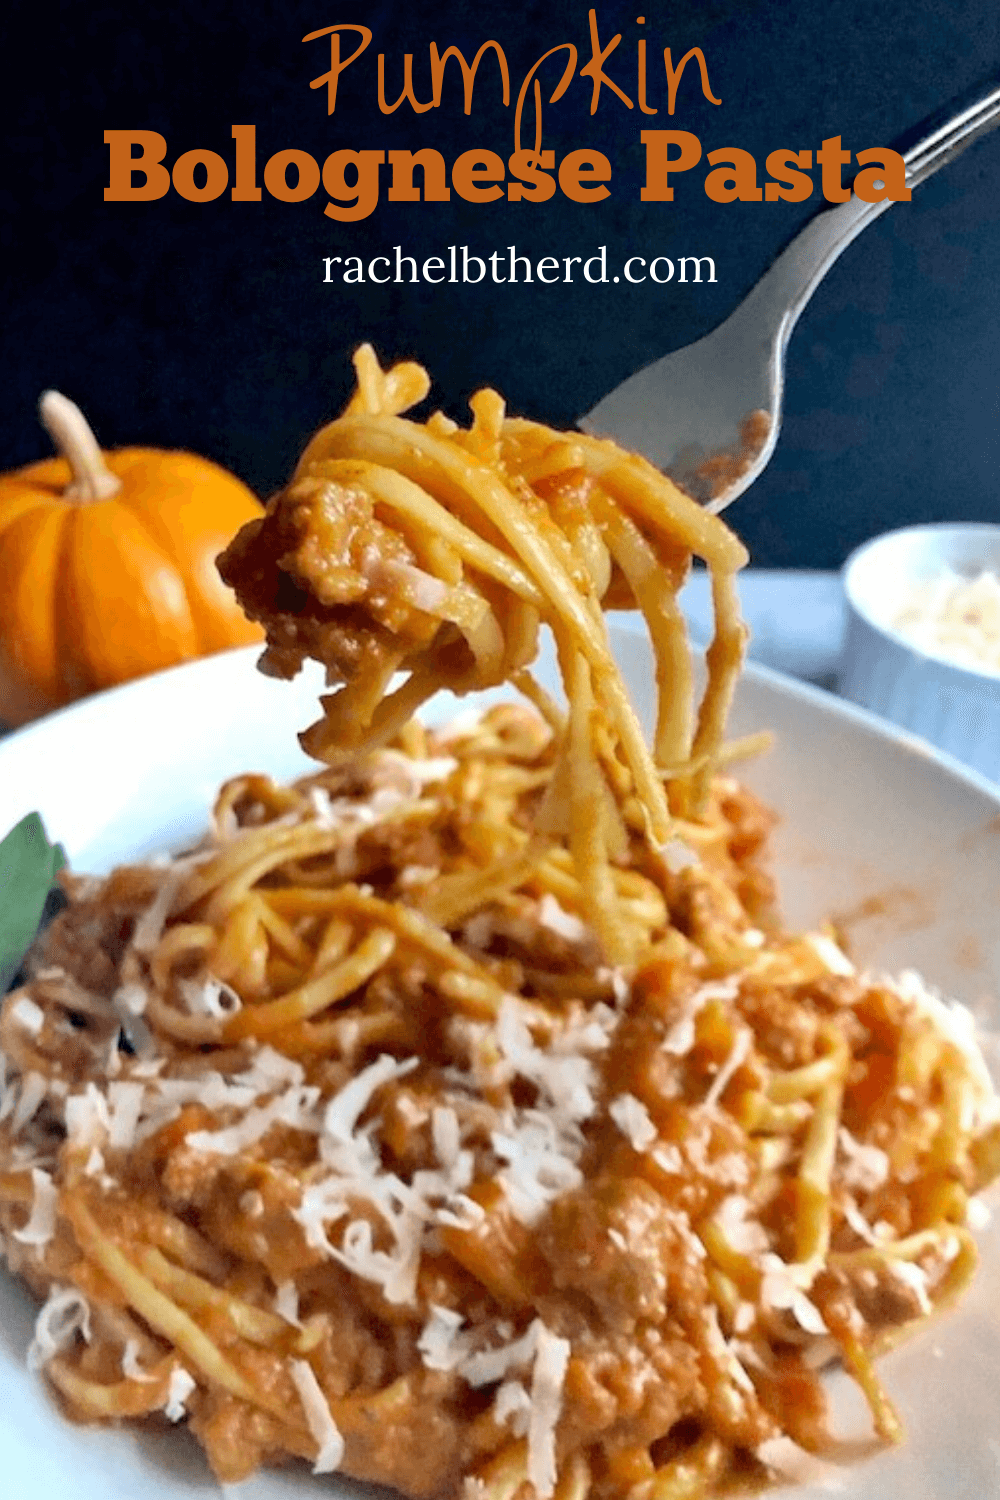 Pumpkin bolognese sauce with spaghetti